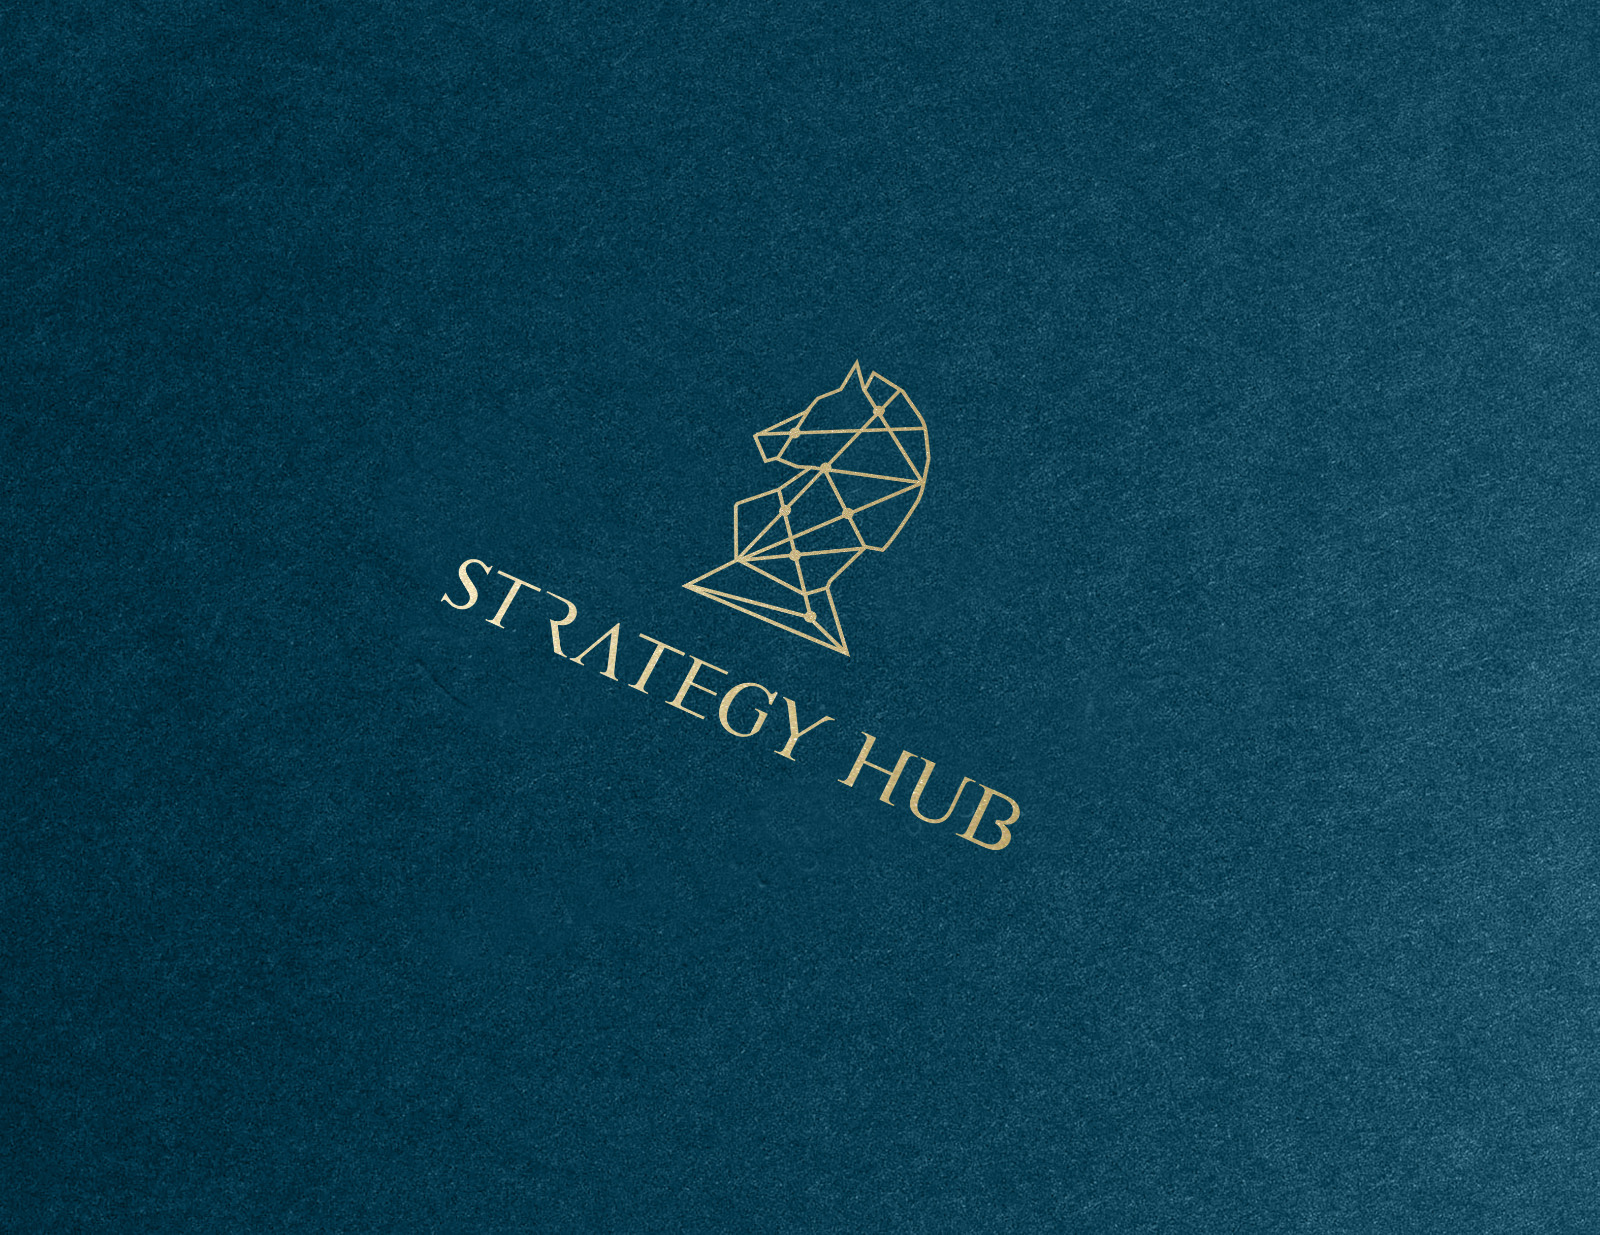 Strategy Hub